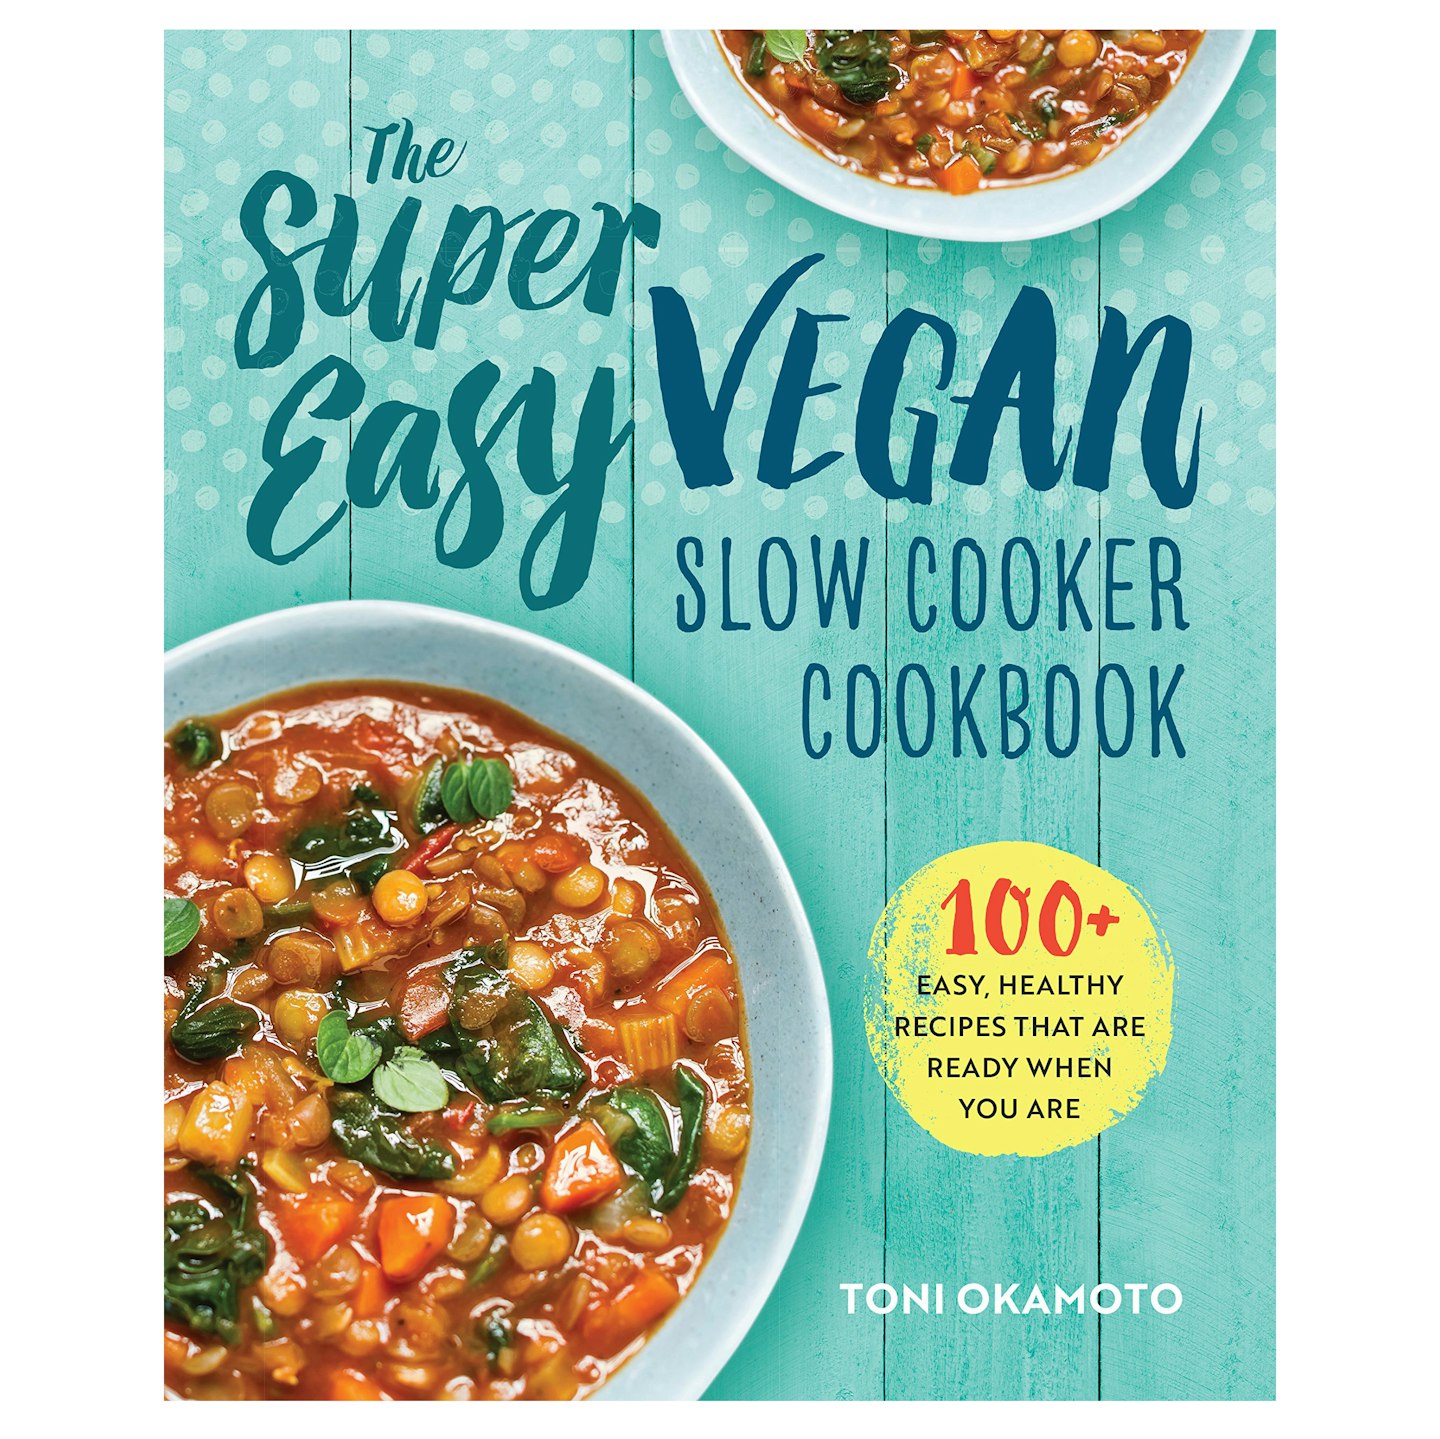 The Super Easy Vegan Slow Cooker Cookbook by Toni Okamoto